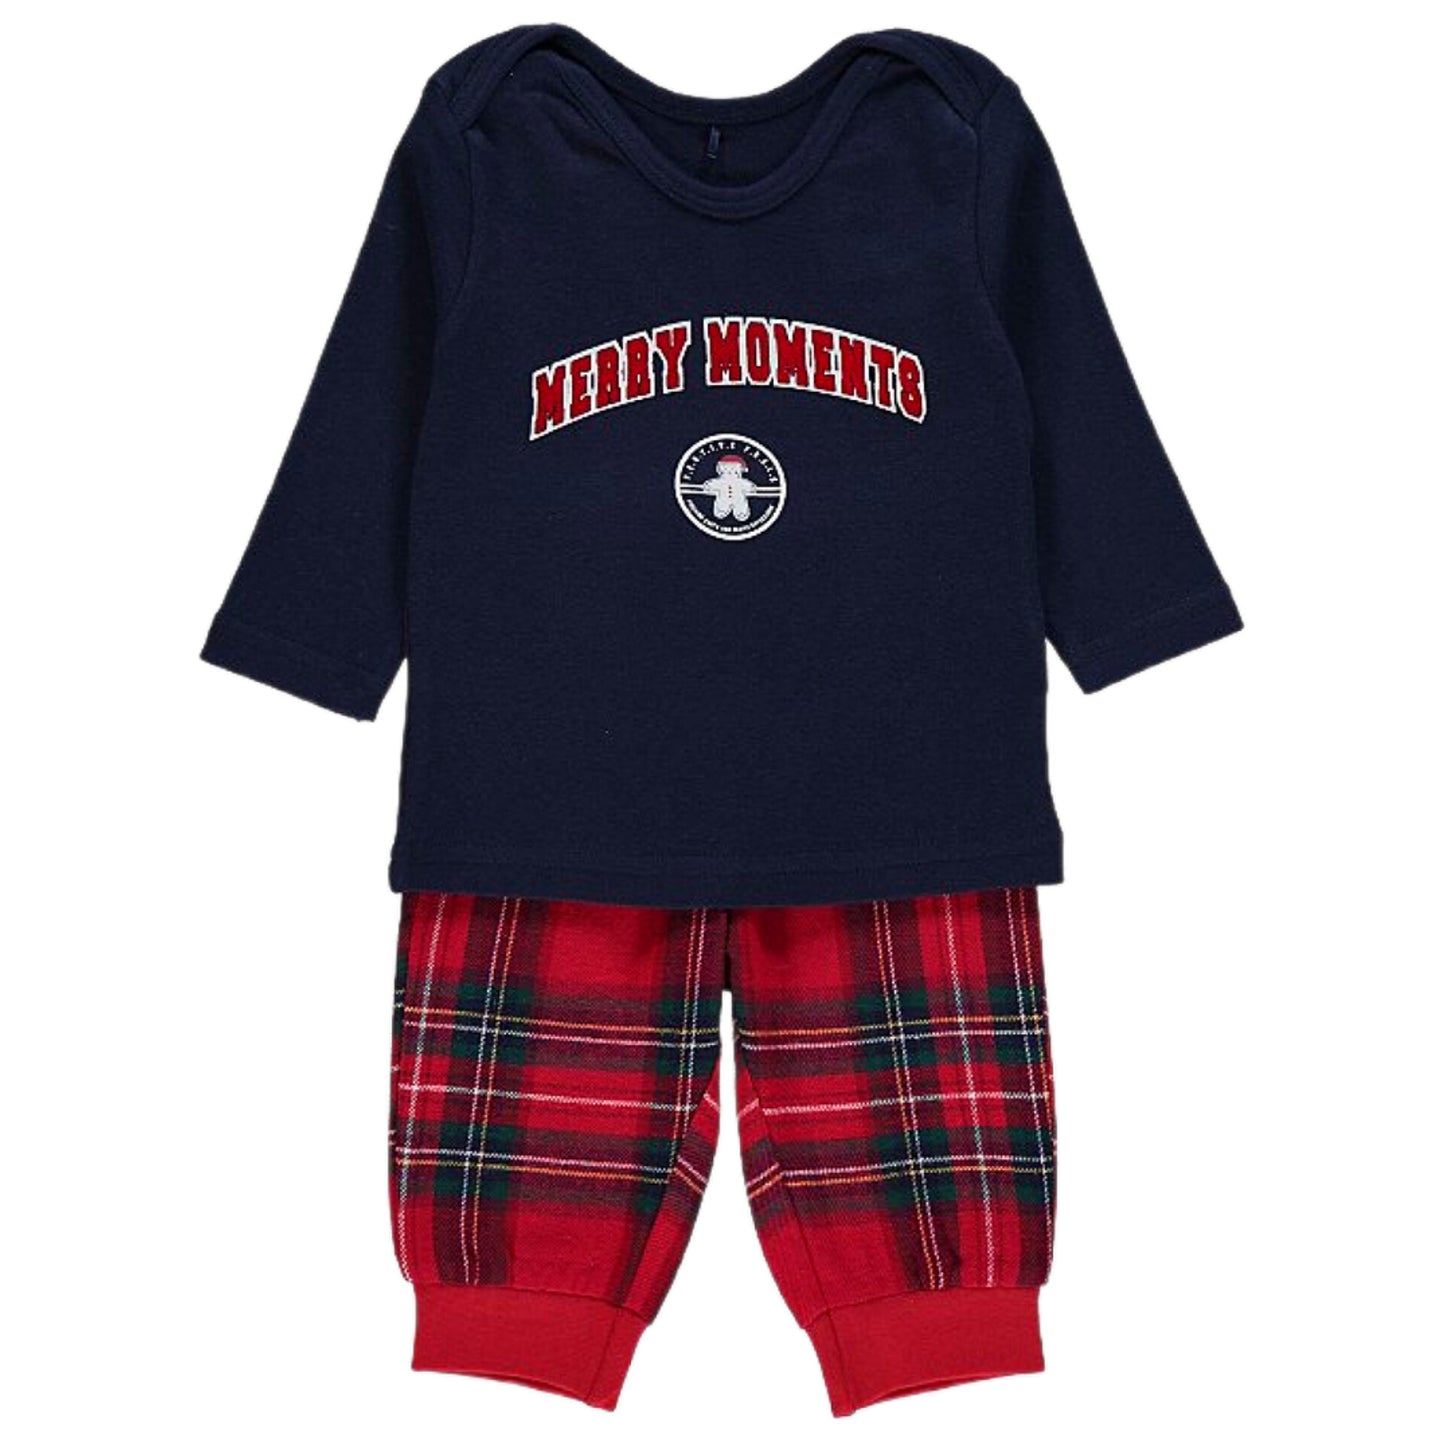 Matching Navy Merry Moments Christmas Pyjamas - Diaper Yard Gh